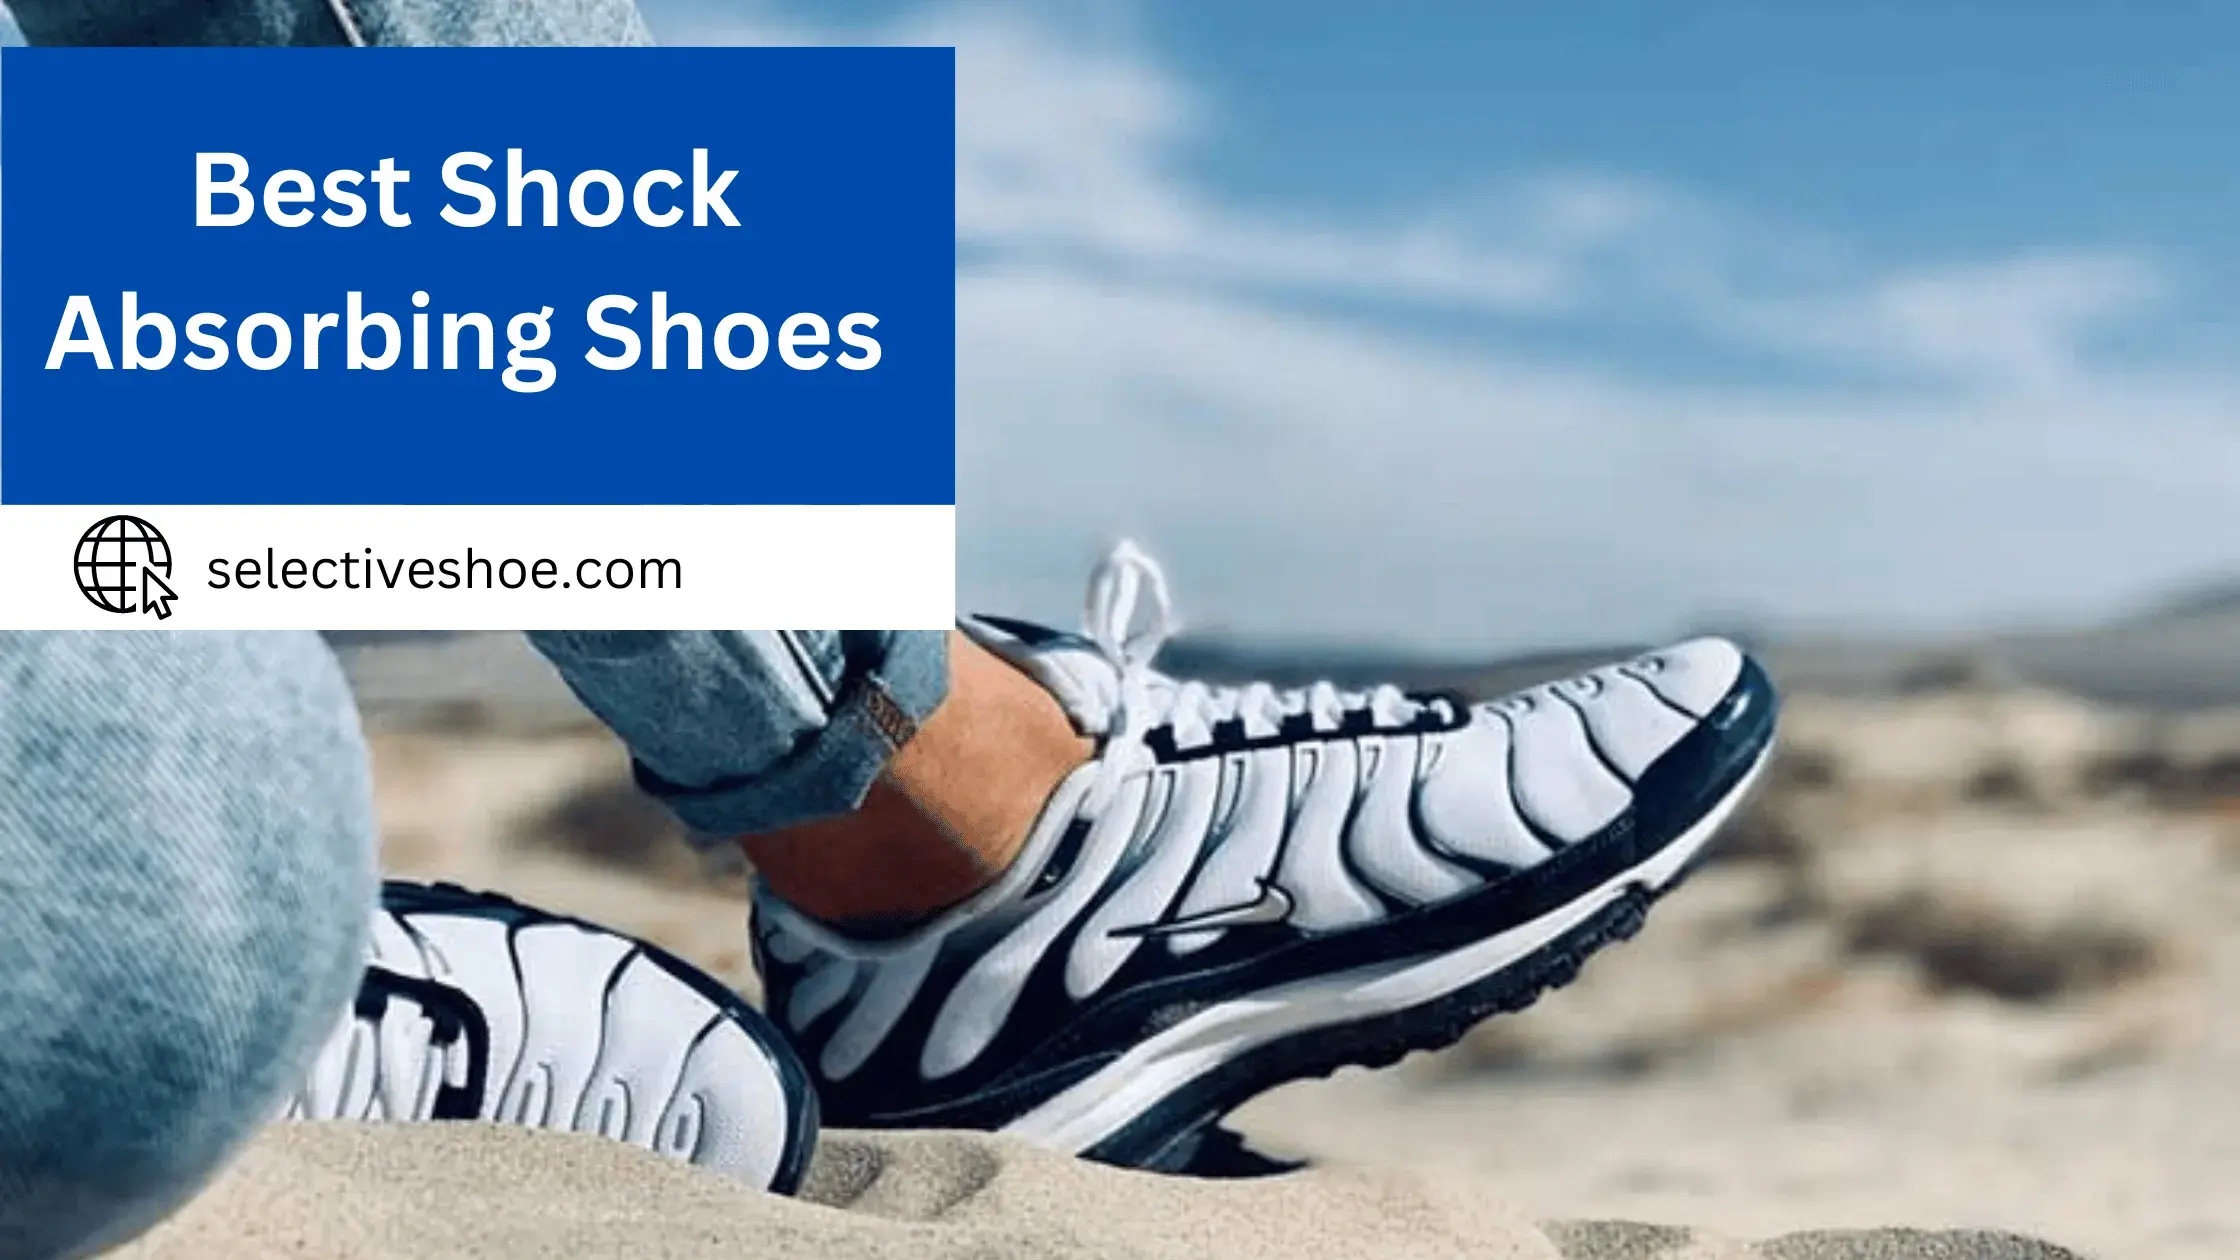 Best Shock Absorbing Shoes - Expert Choice